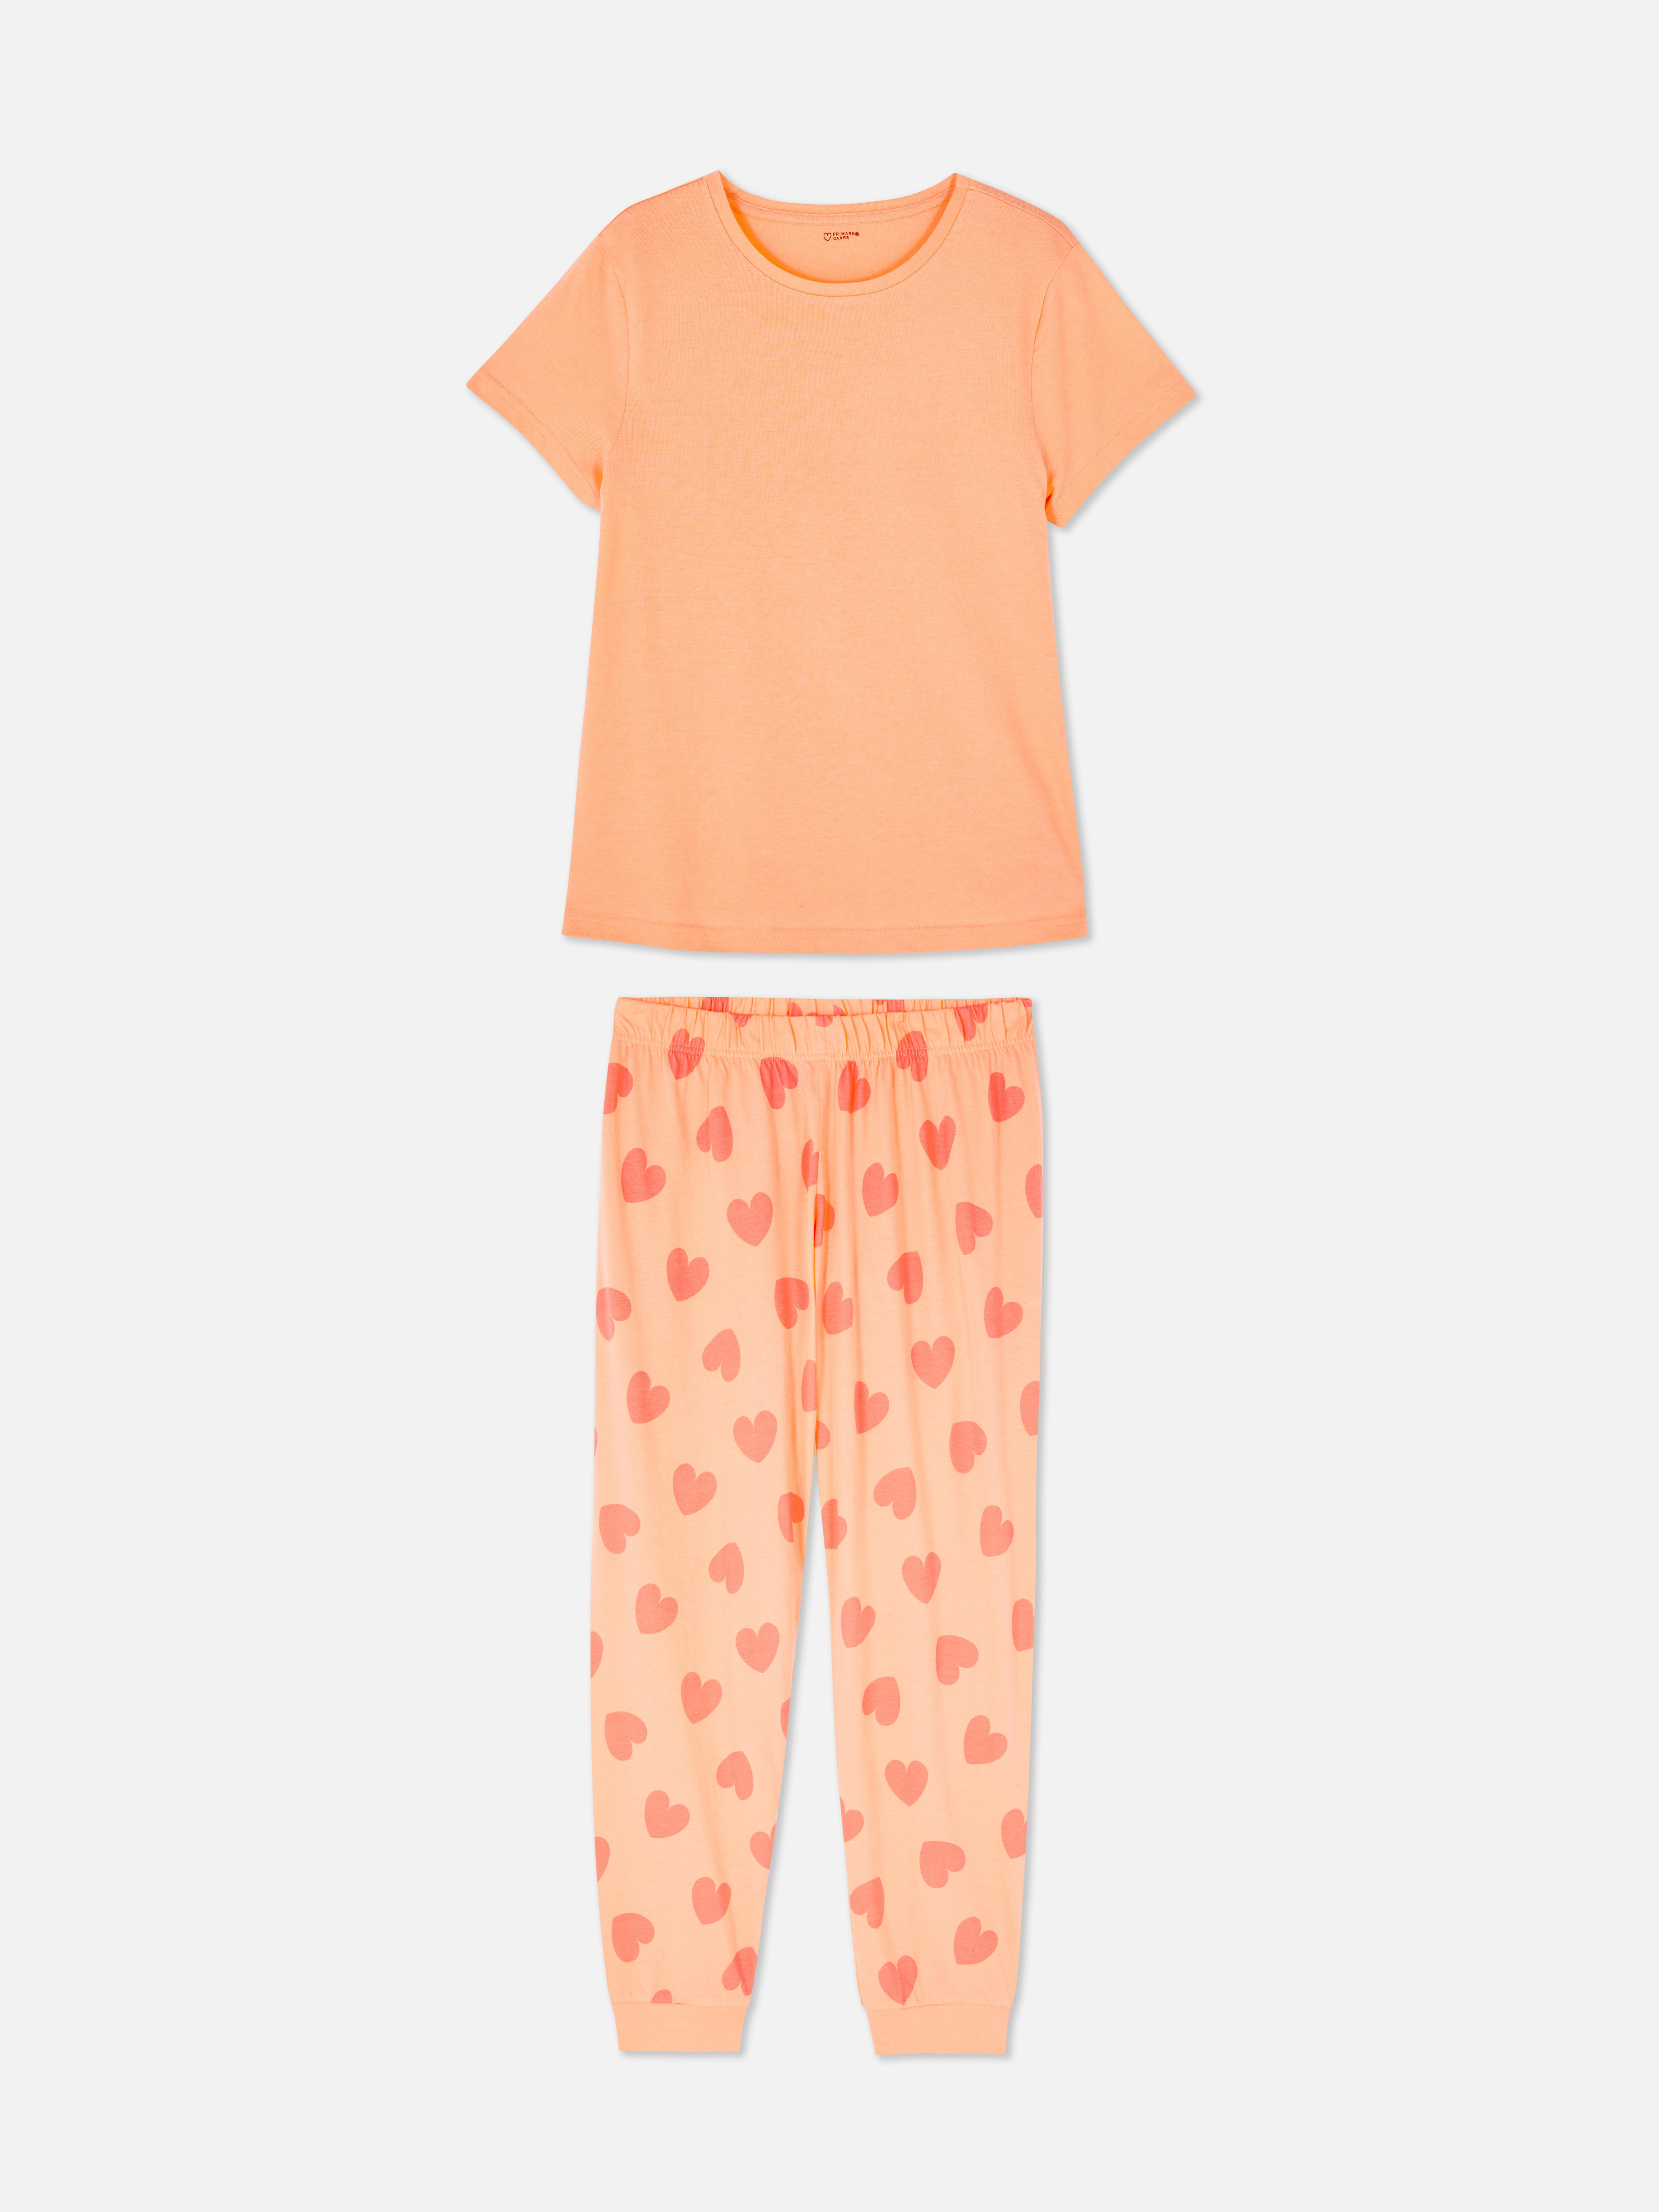 Primark Love to Lounge Pyjama Set  Comfy outfits, Clothes, Lounge pajamas